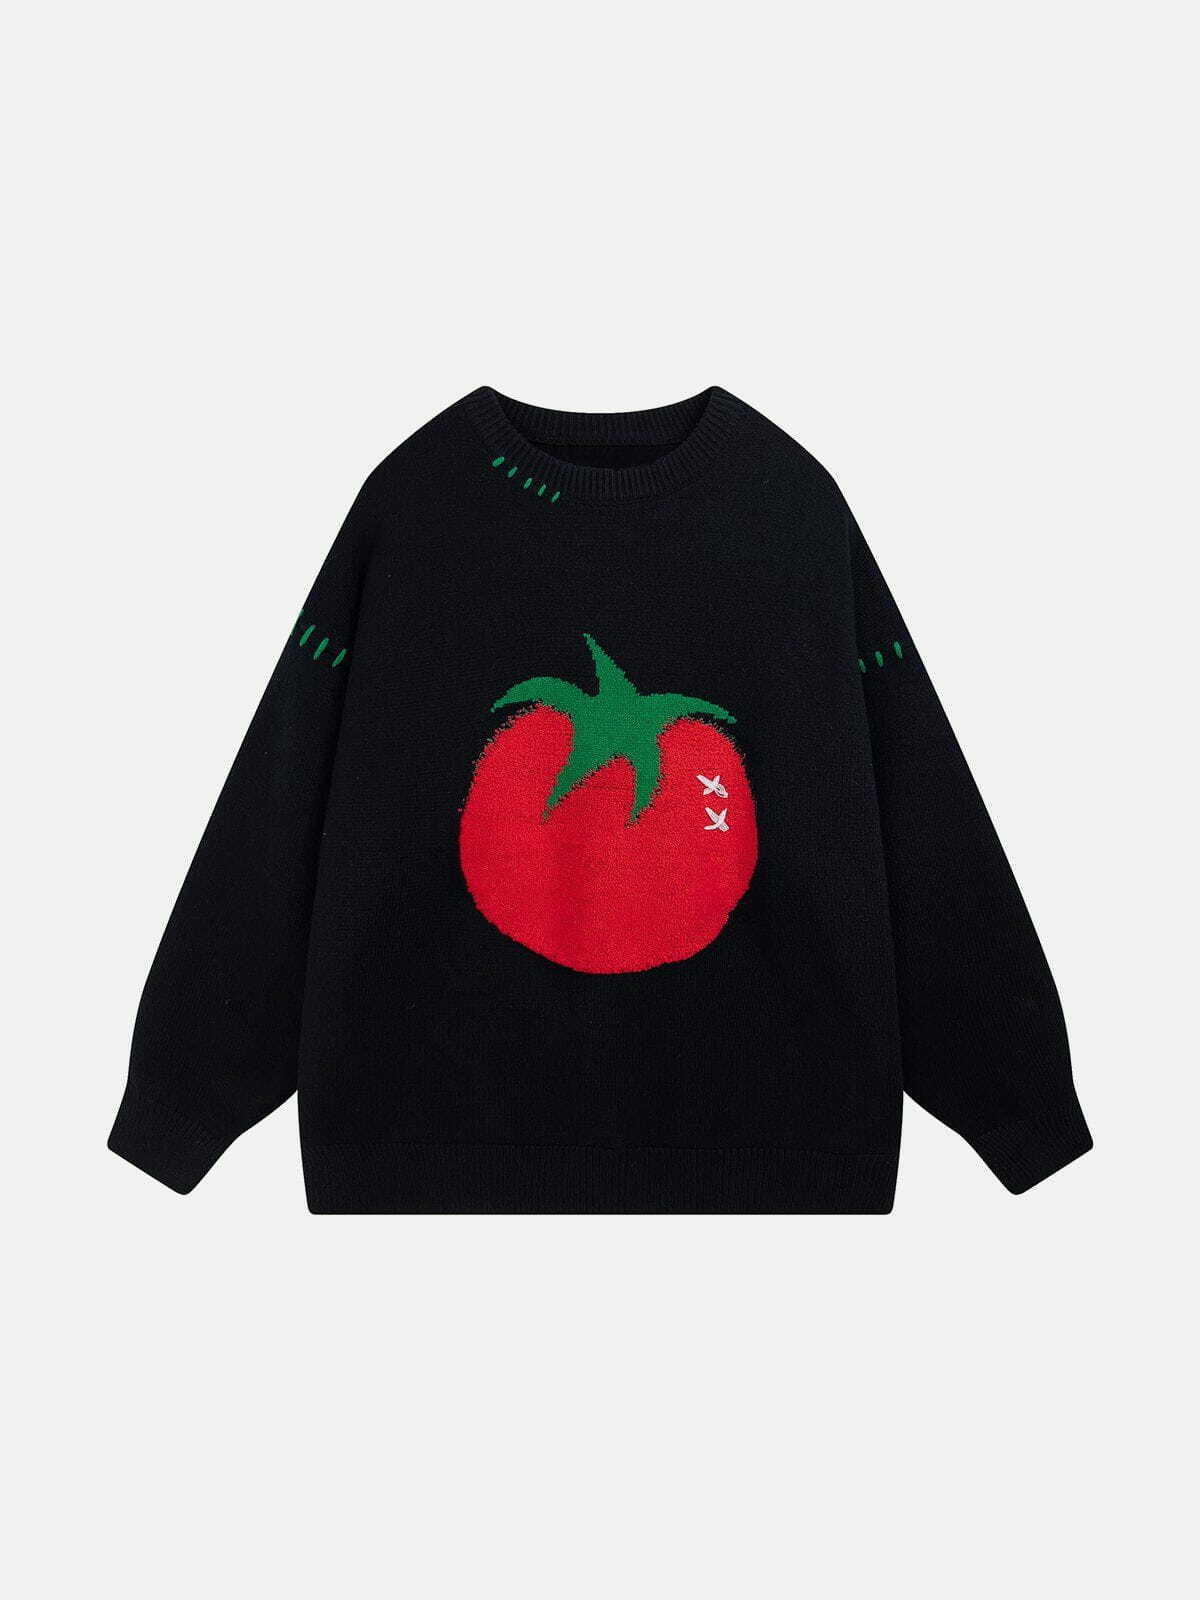 vibrant tomato jacquard sweater chic & trendy streetwear 2078